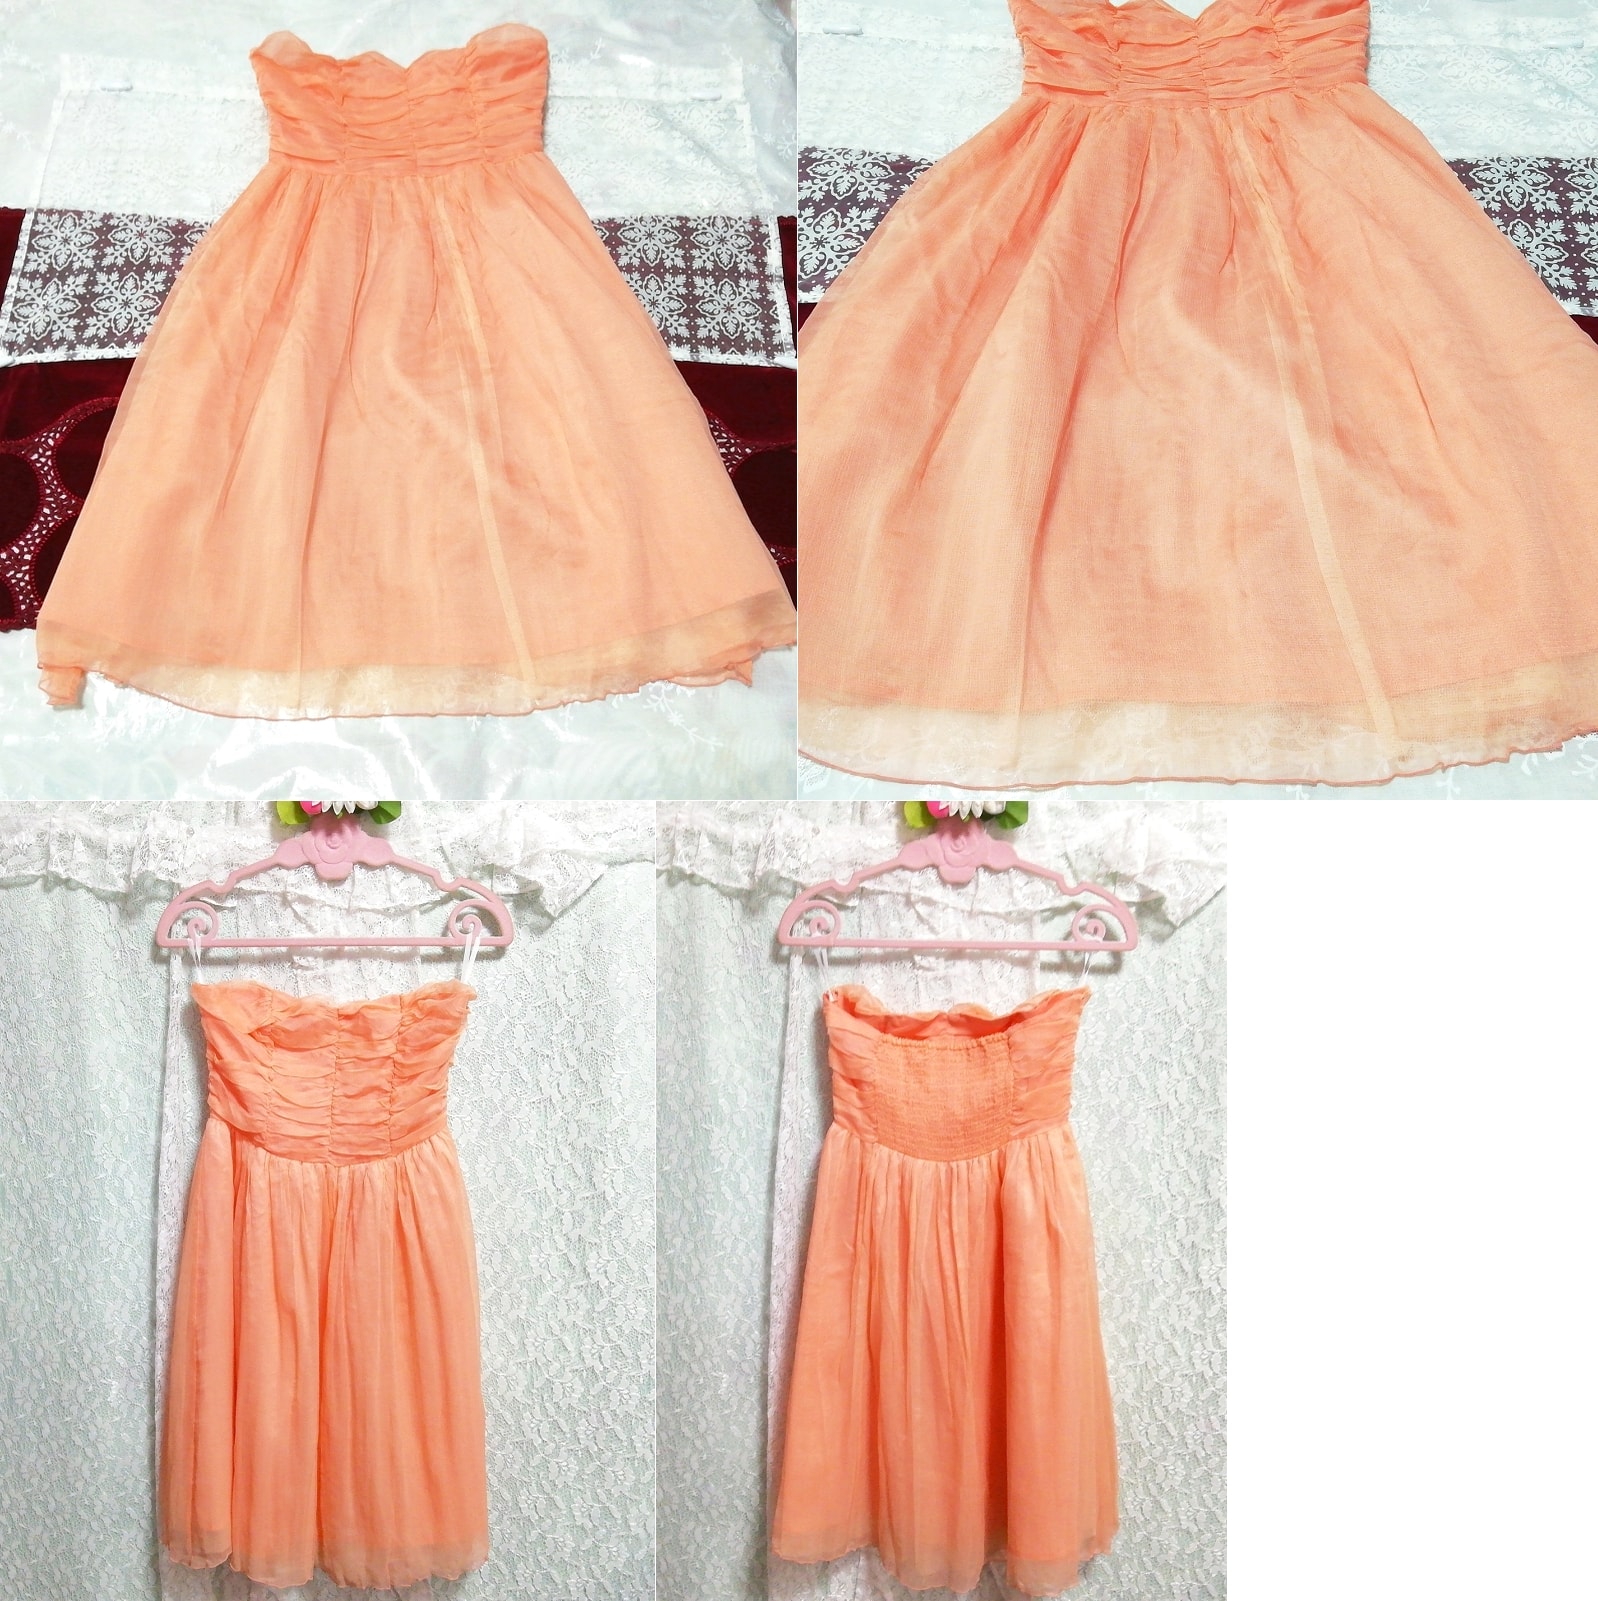 Orange chiffon silk negligee nightgown nightwear dress, fashion, ladies' fashion, nightwear, pajamas